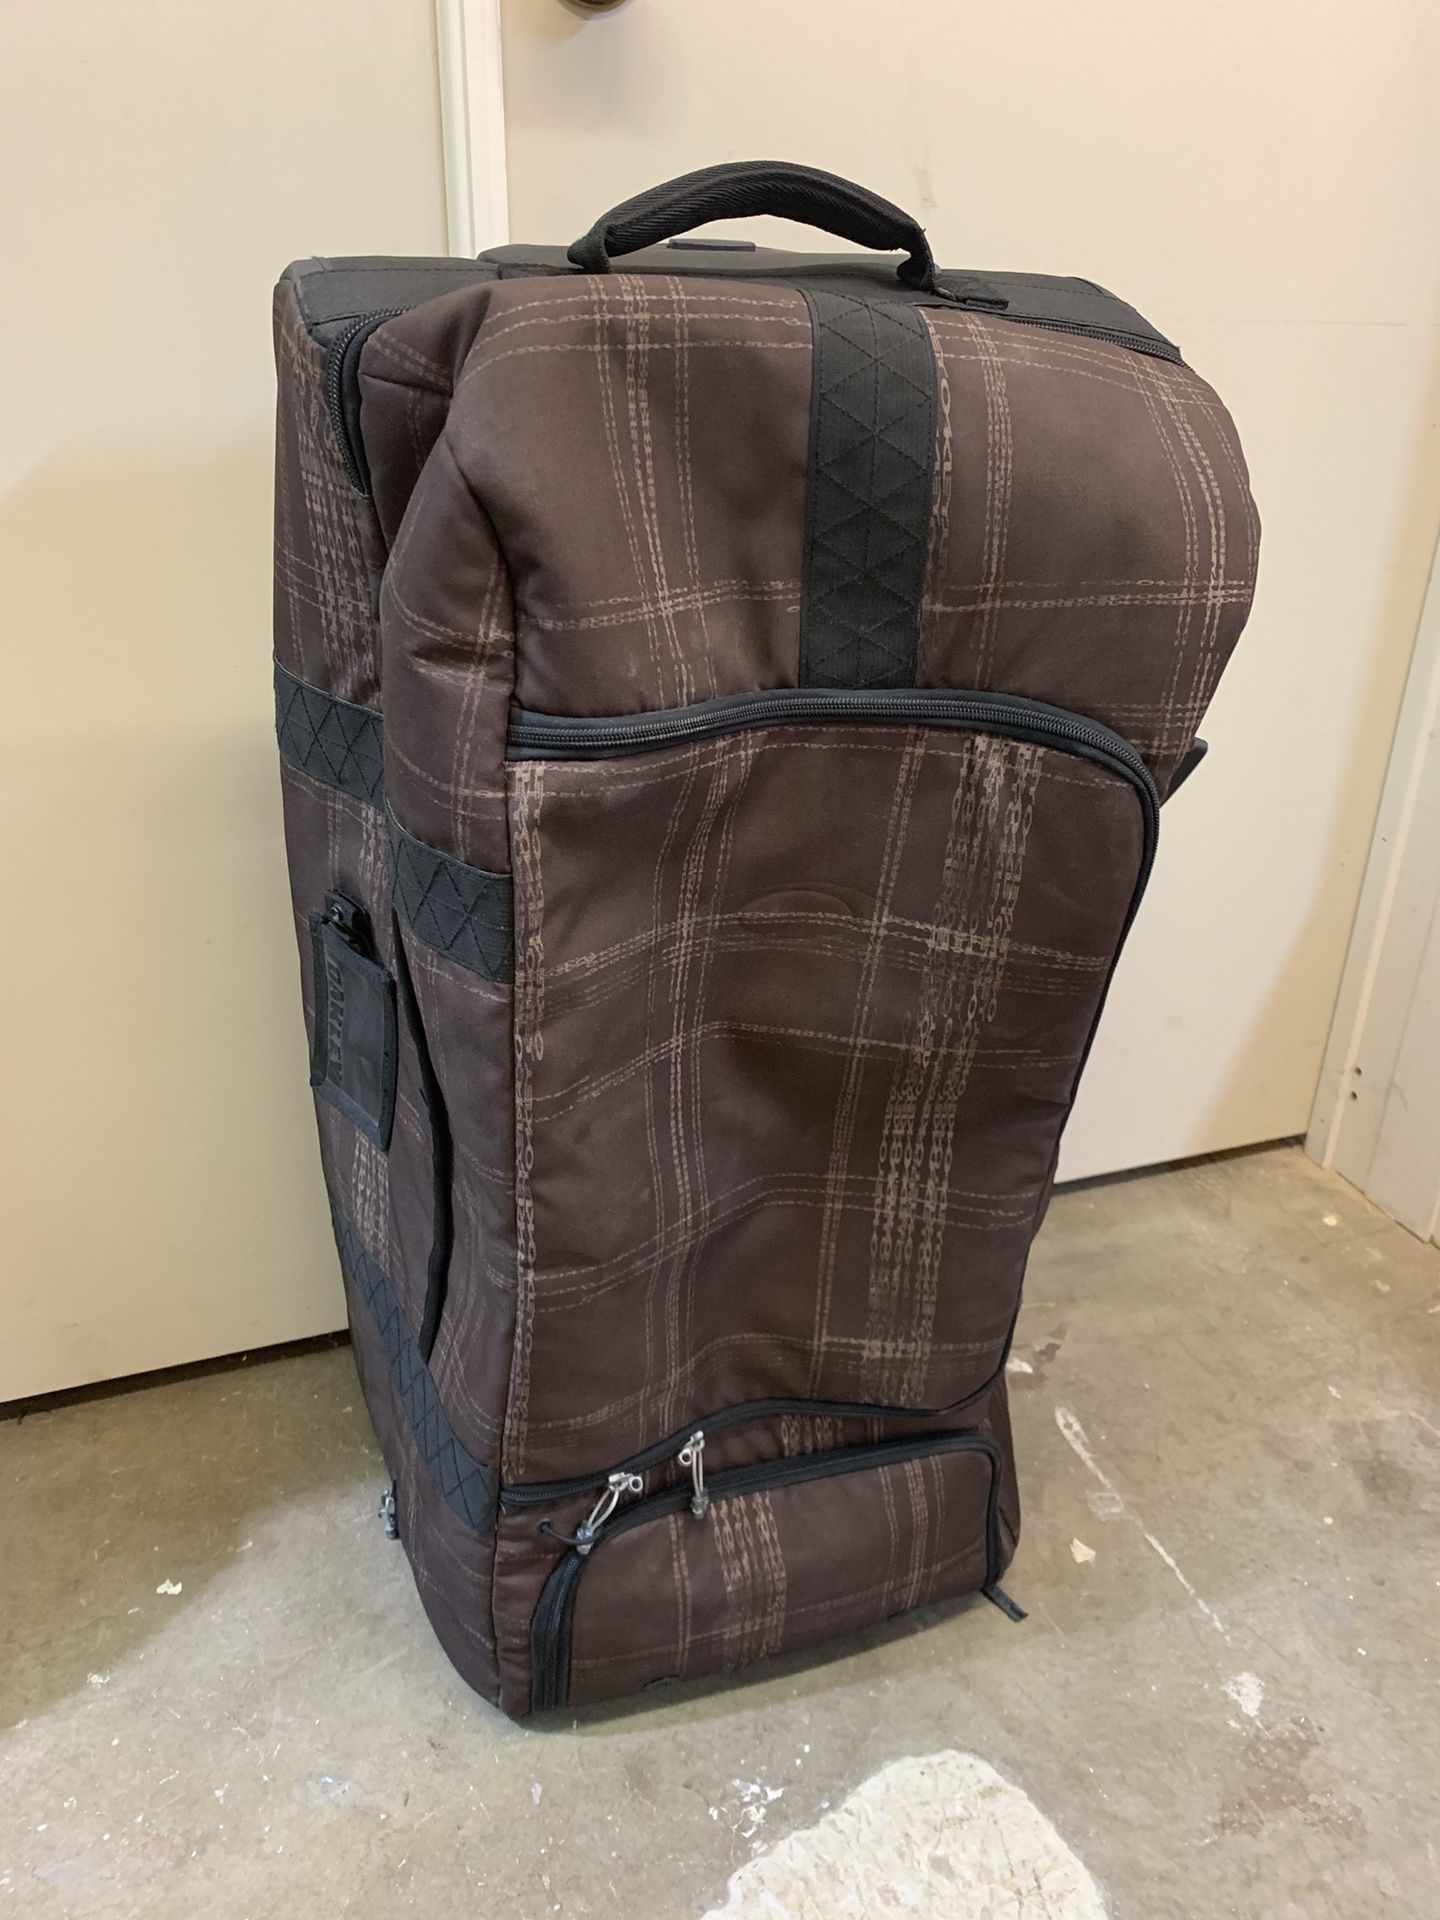 Oakley Luggage Snowboard Outdoor Bag - Very good condition!